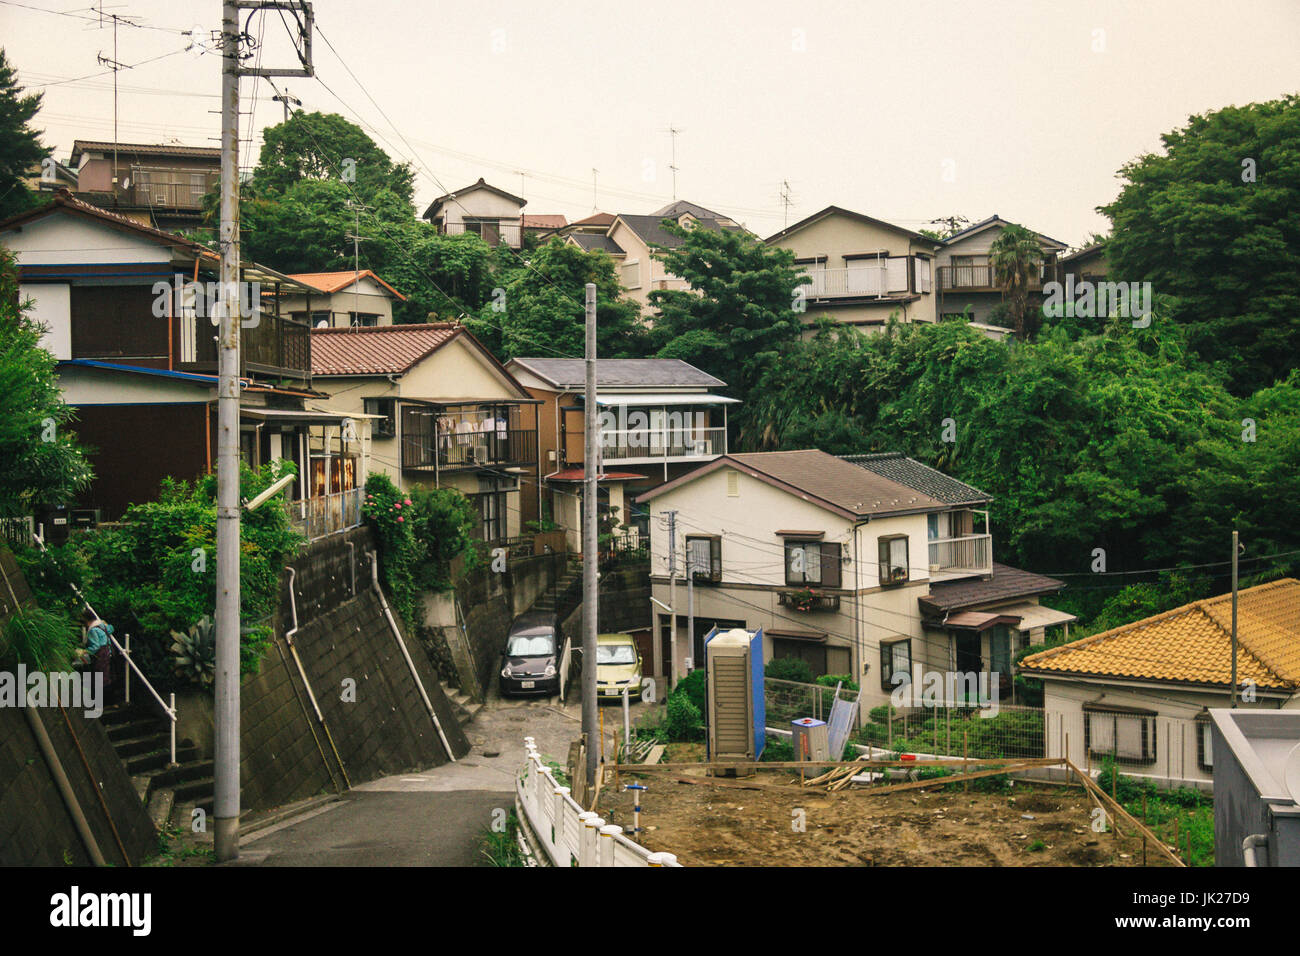 shin-sugita-residential-district-yokoham